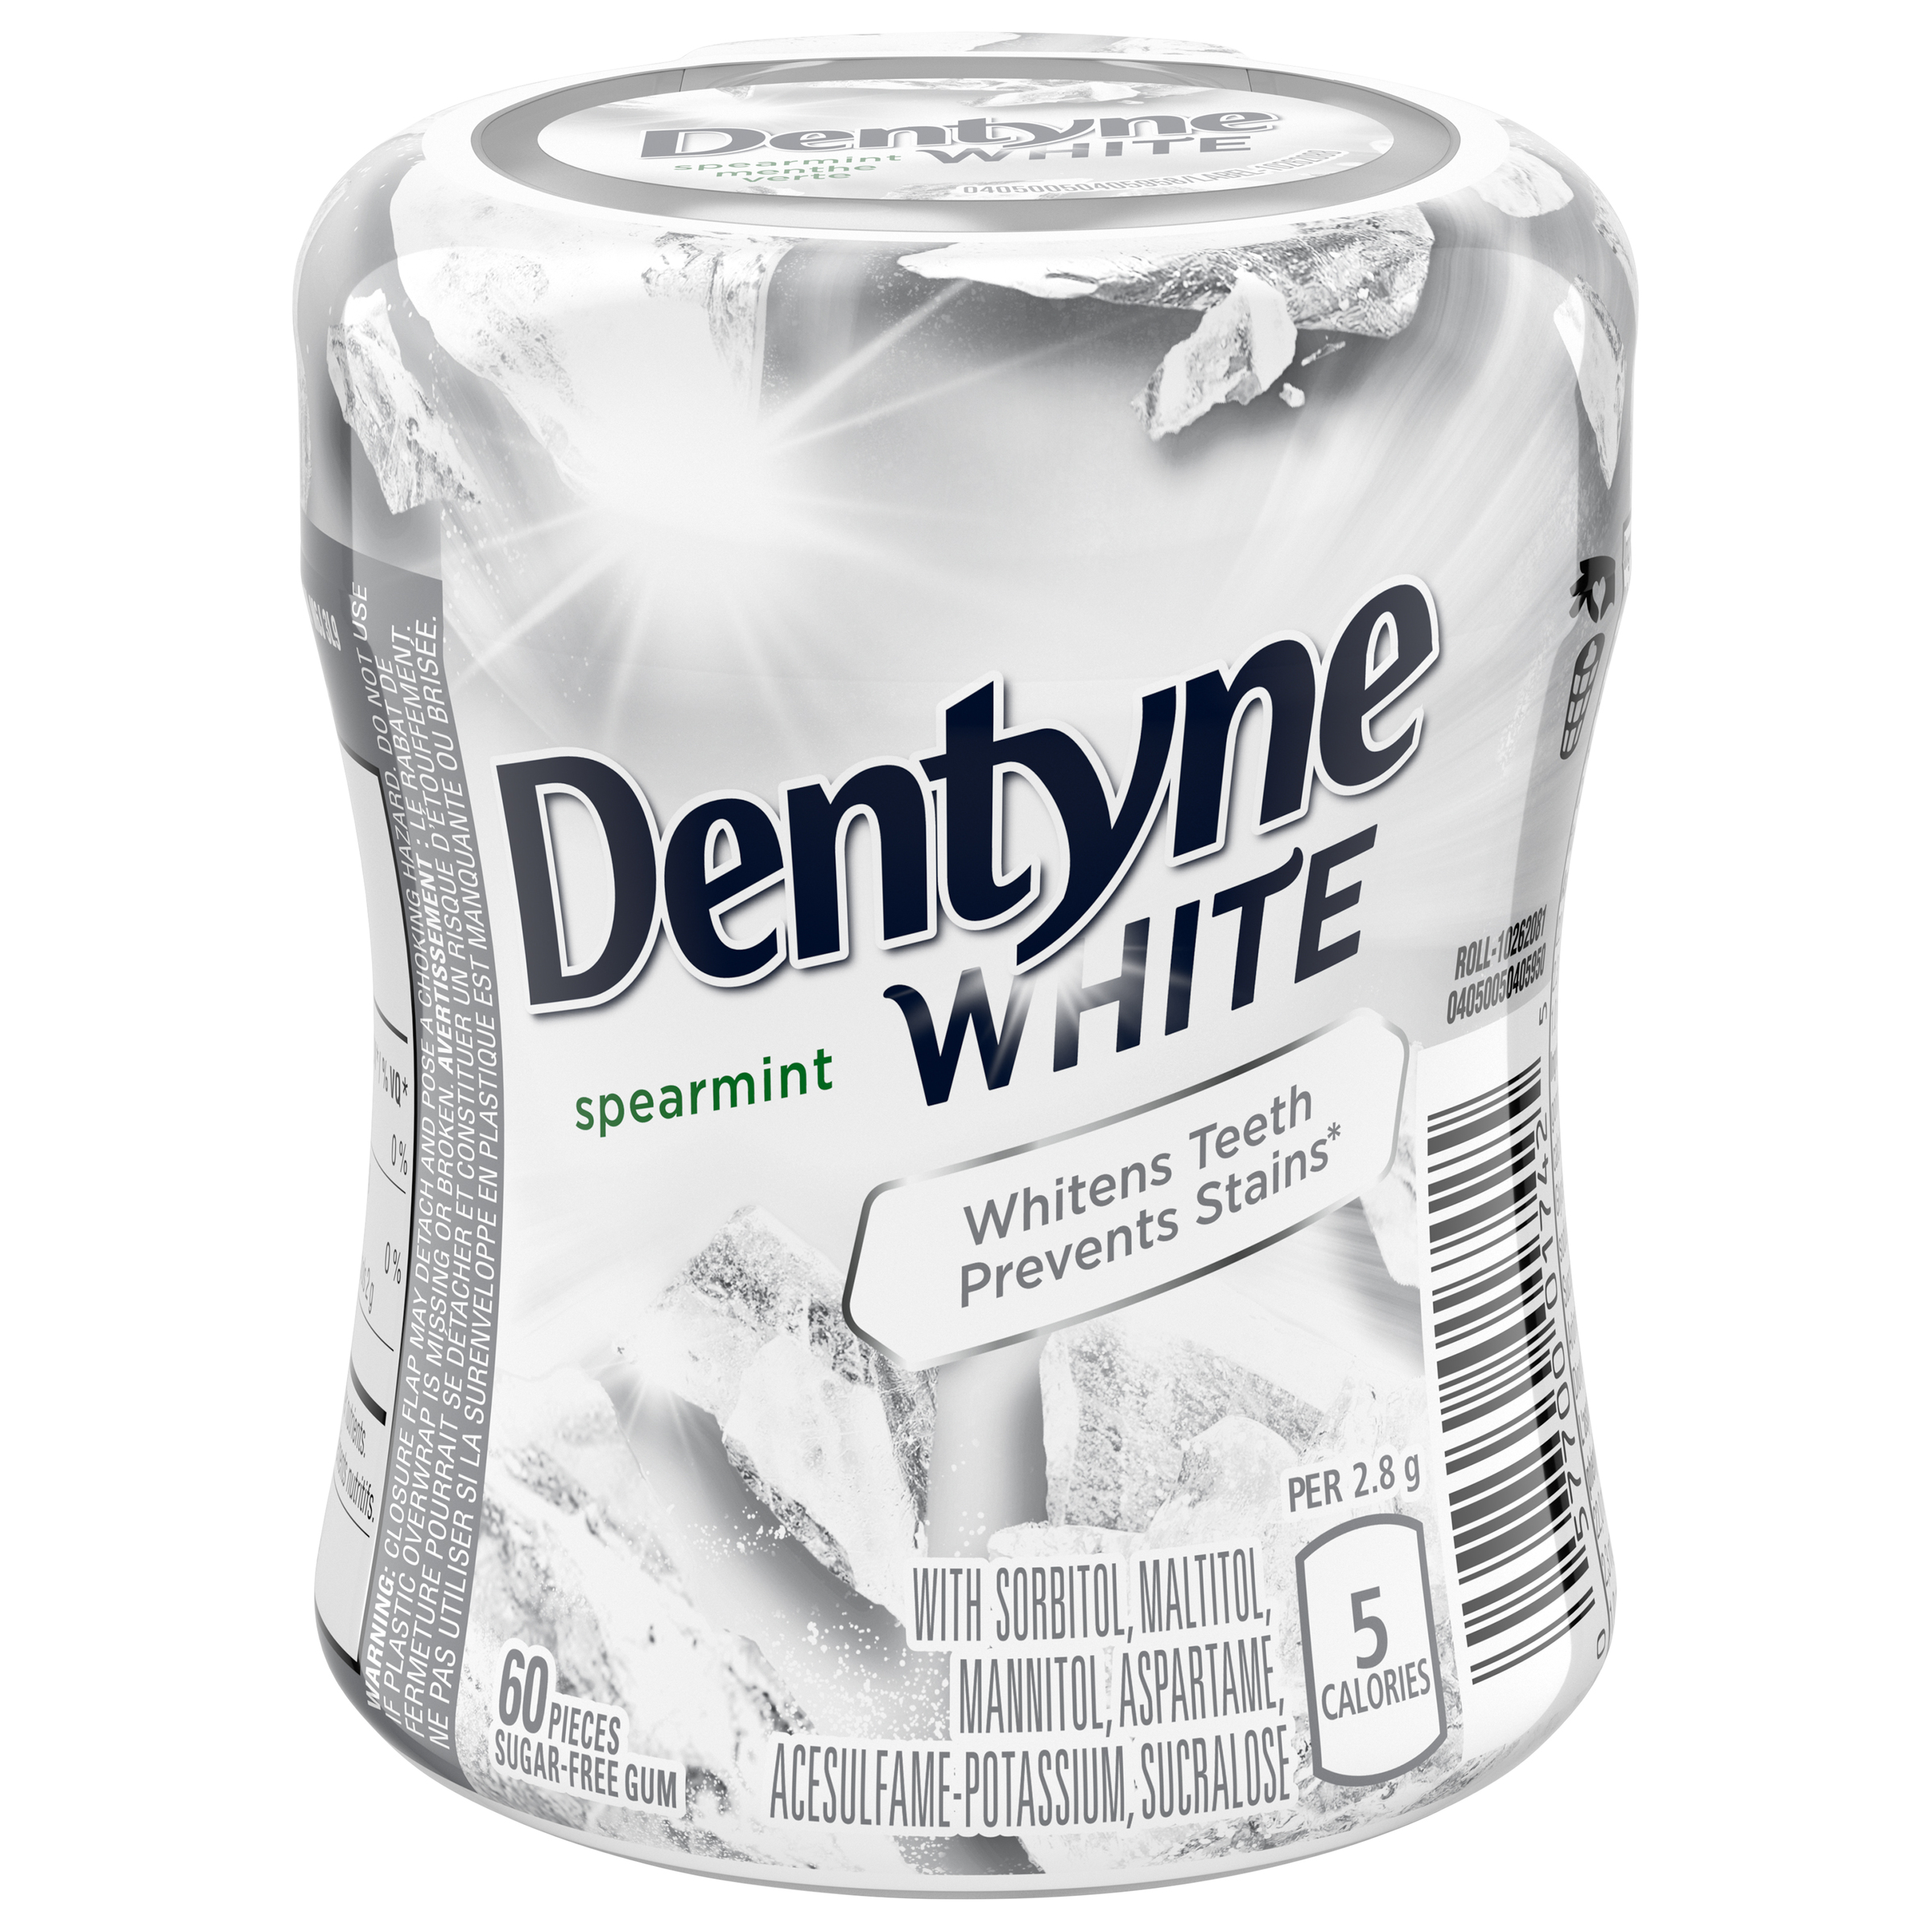 DENTYNE WHITE SPEARMINT BOTTLE 60 PIECES-0